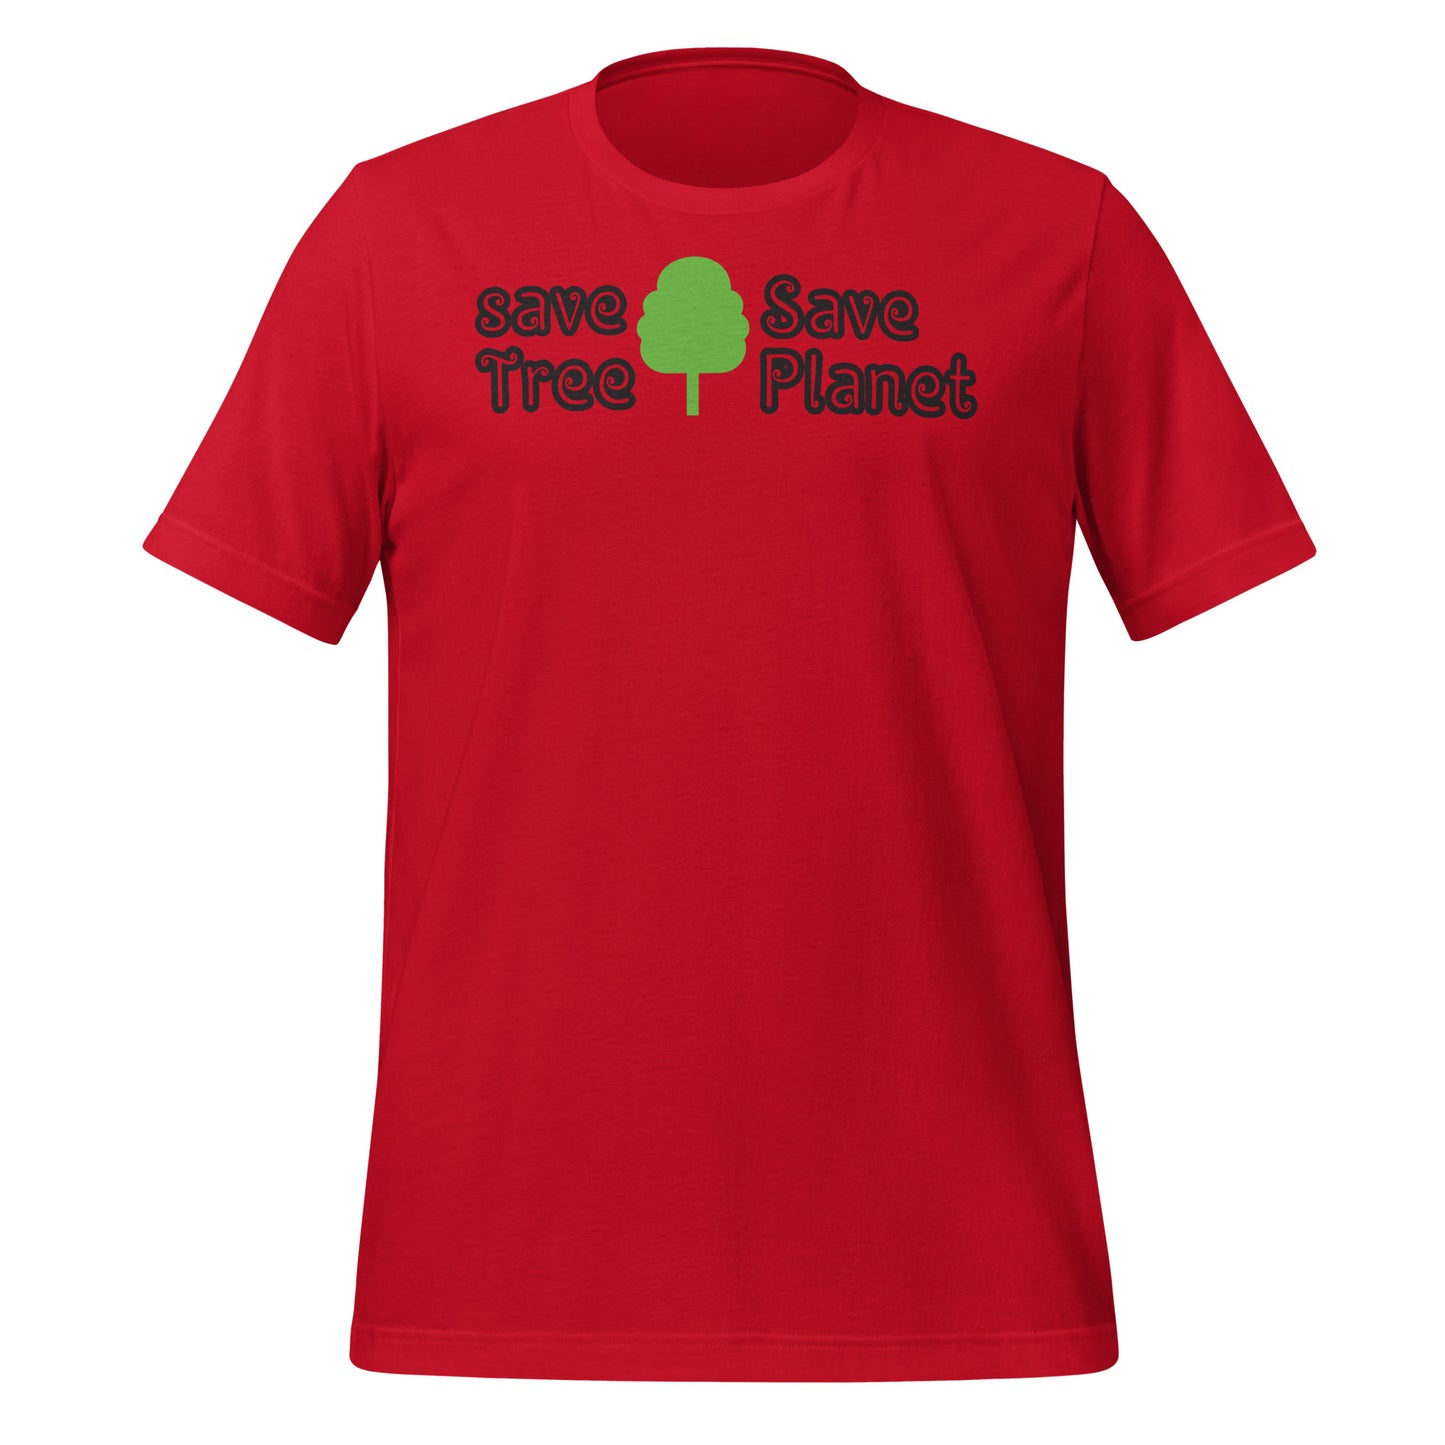 Eco-Friendly 'Save Tree Save Planet' T-Shirt